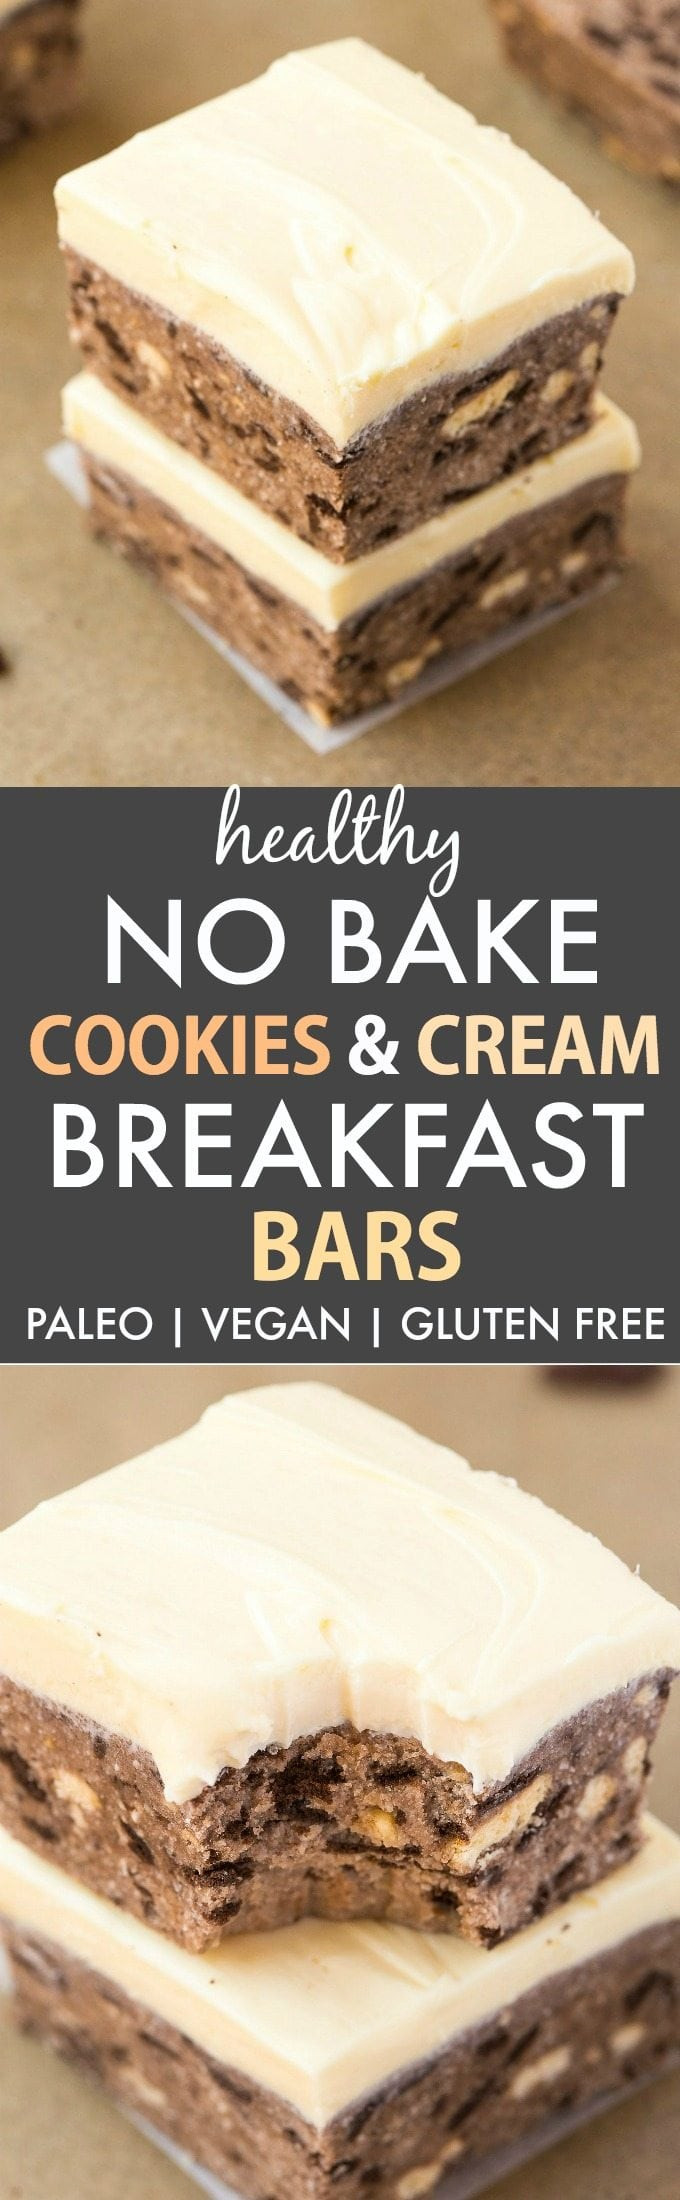 Healthy Breakfast Cookies And Bars
 Healthy No Bake Cookies and Cream Breakfast Bars Paleo